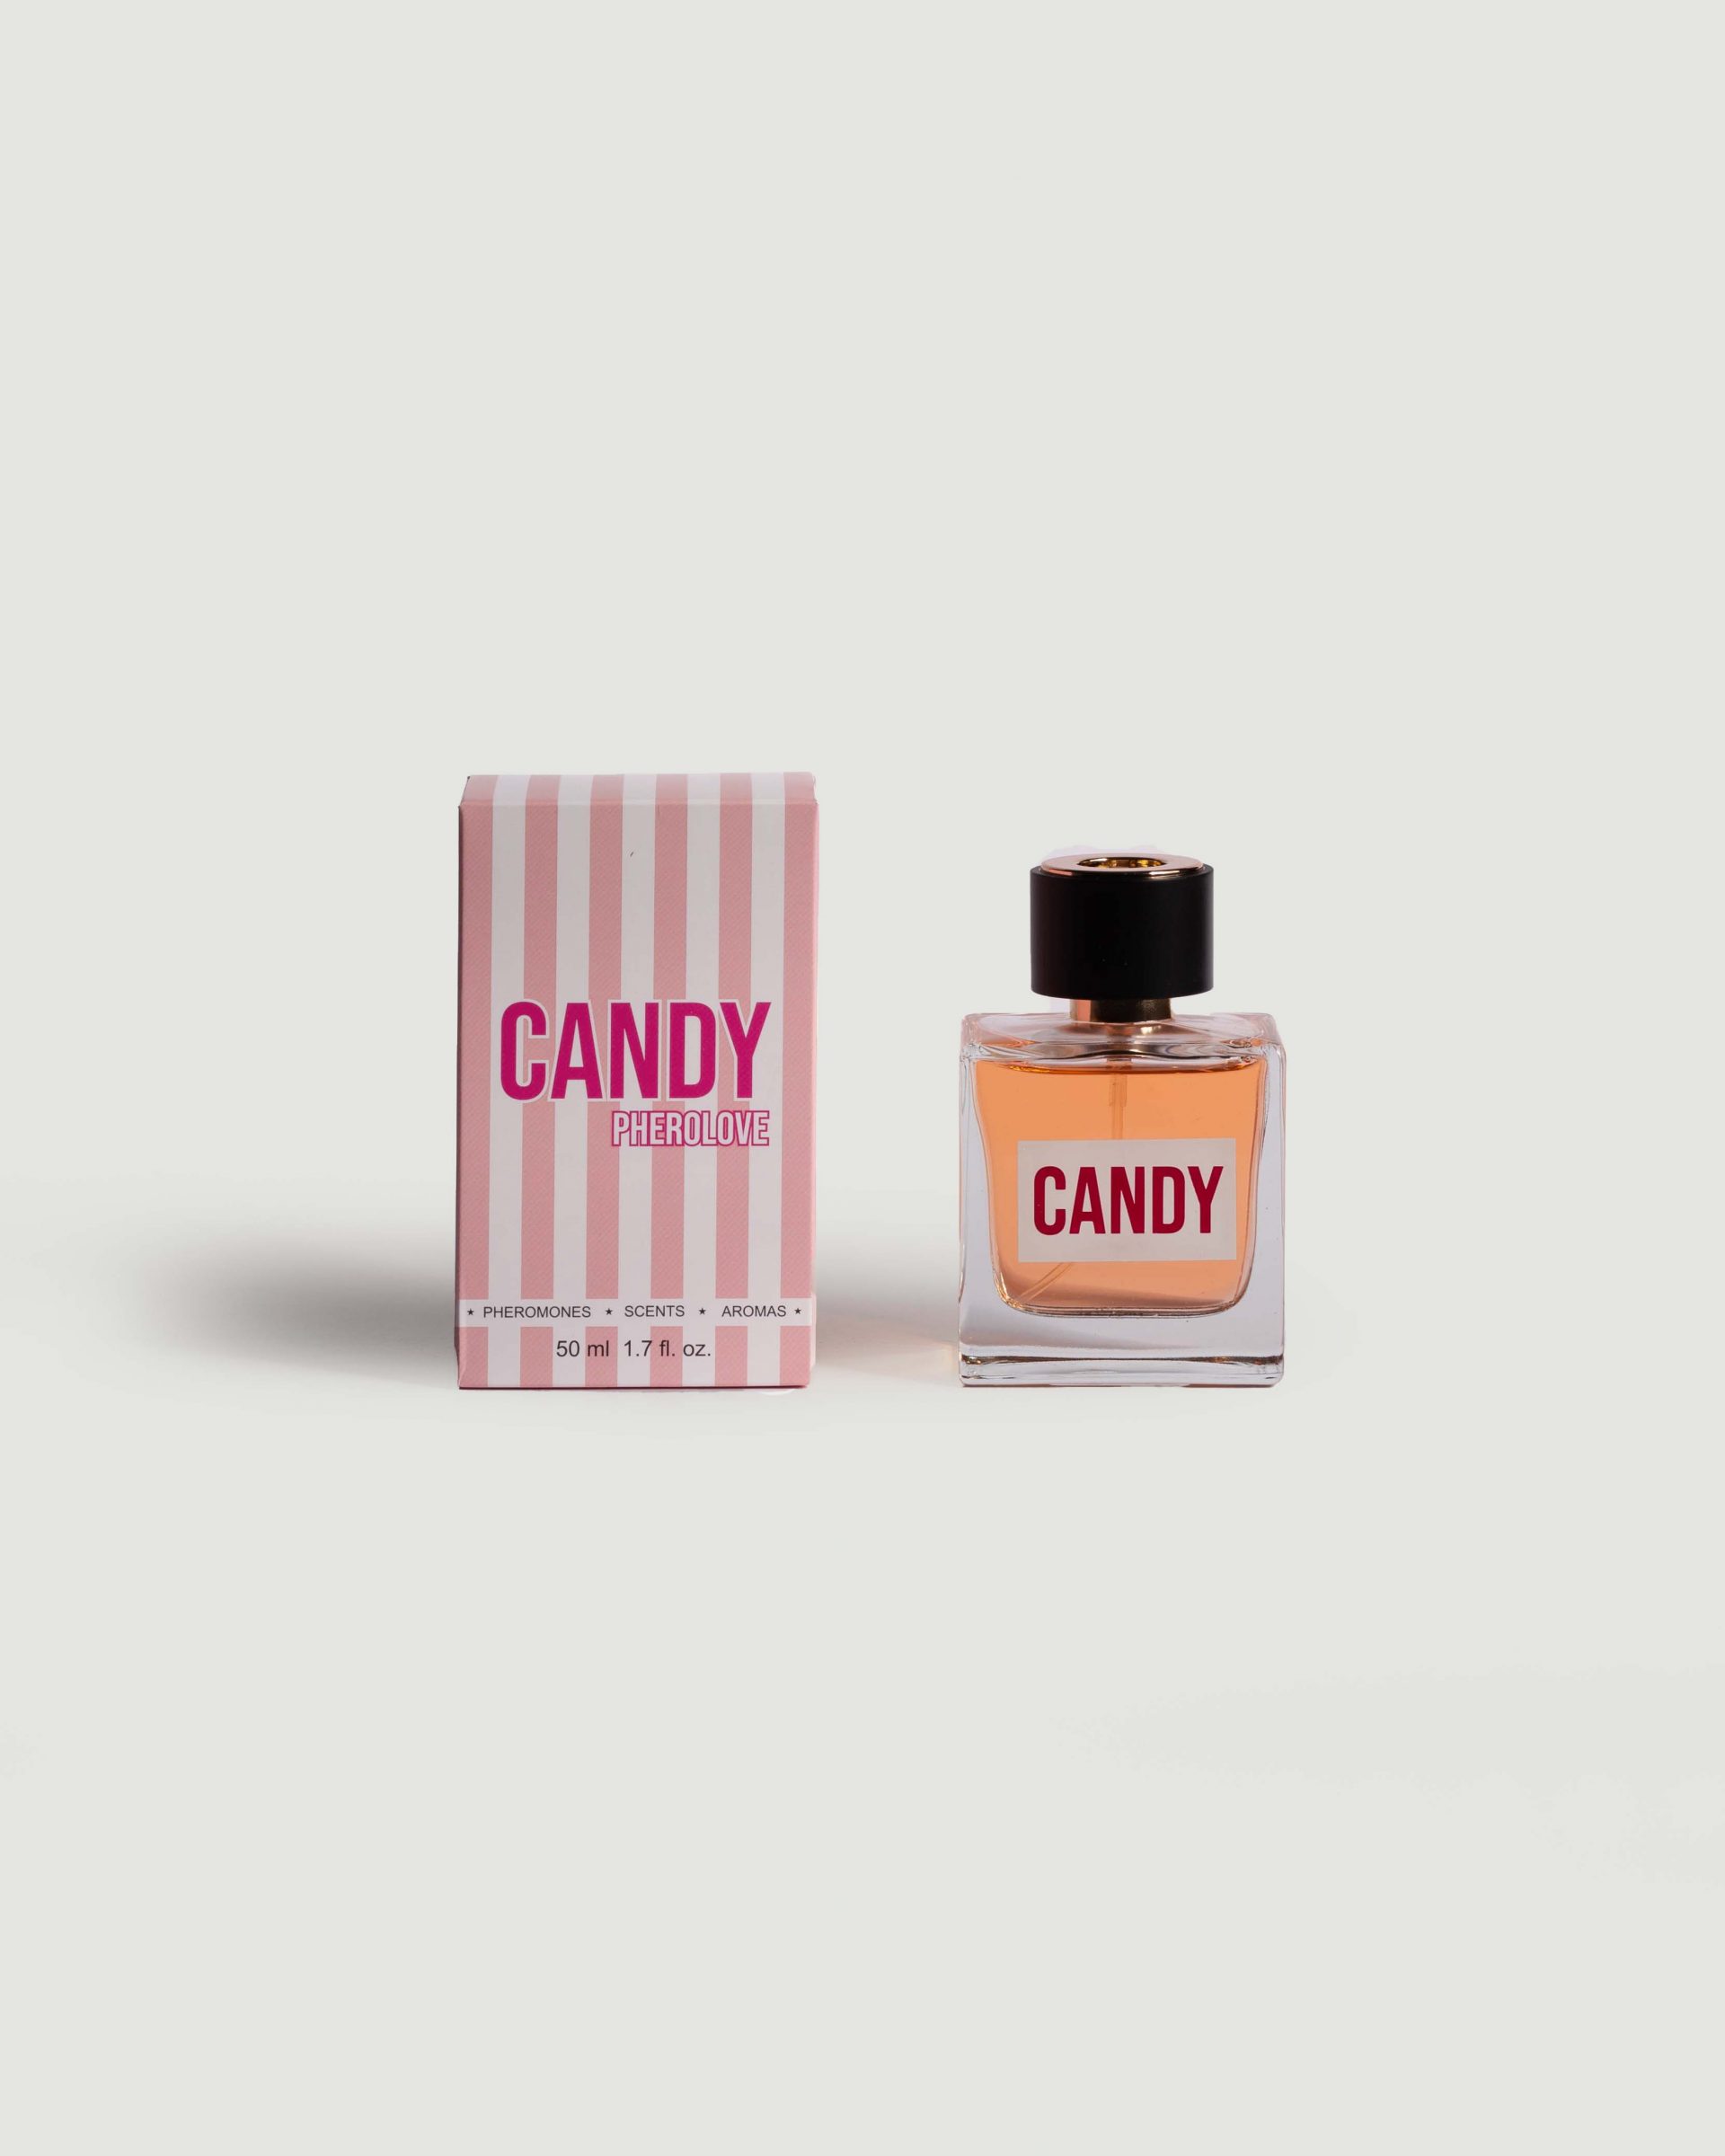 Candy Pherolove 50ml